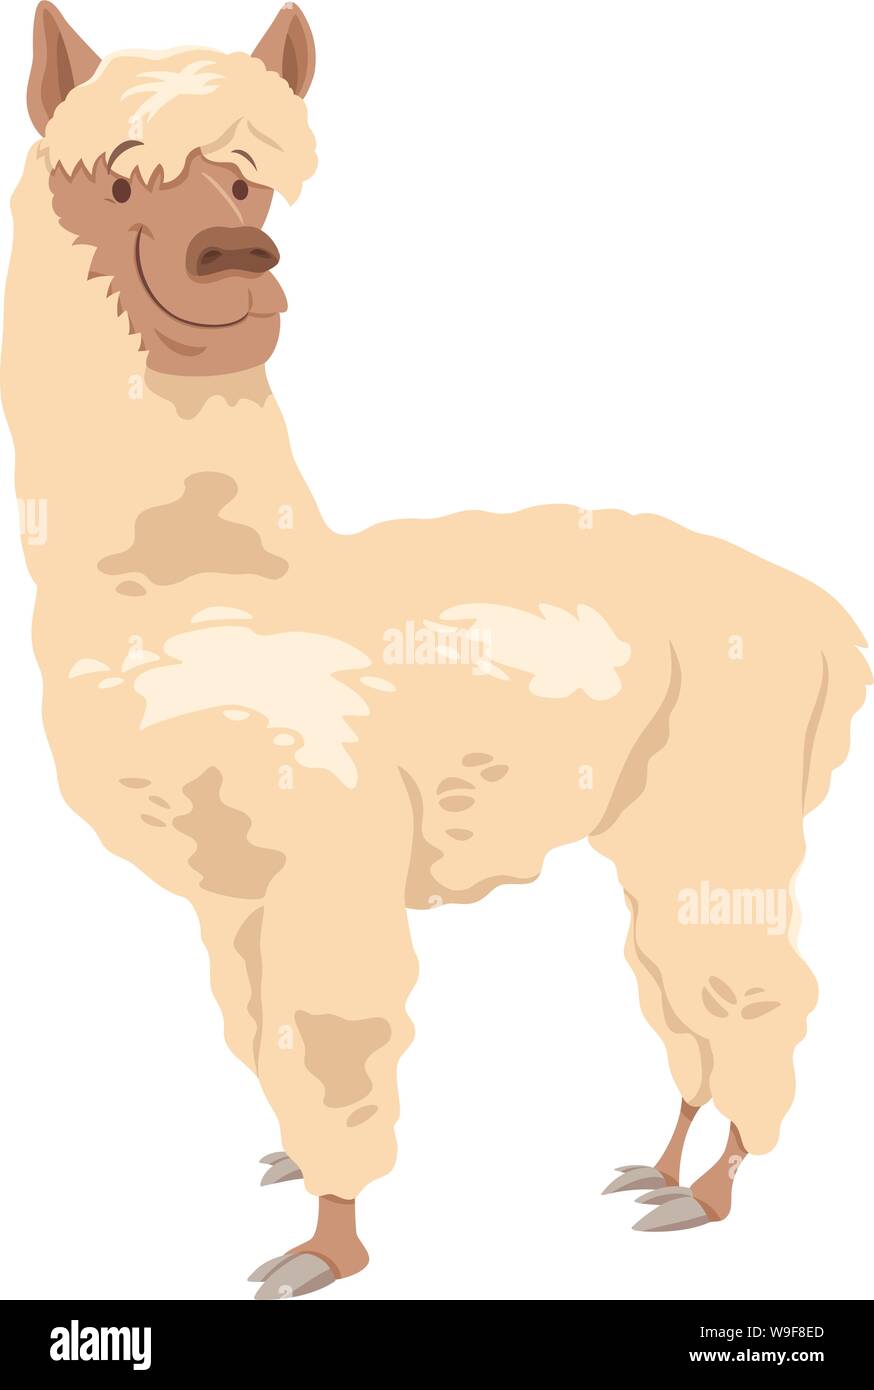 Cartoon Illustration of Funny Llama or Alpaca Farm Animal Character Stock Vector